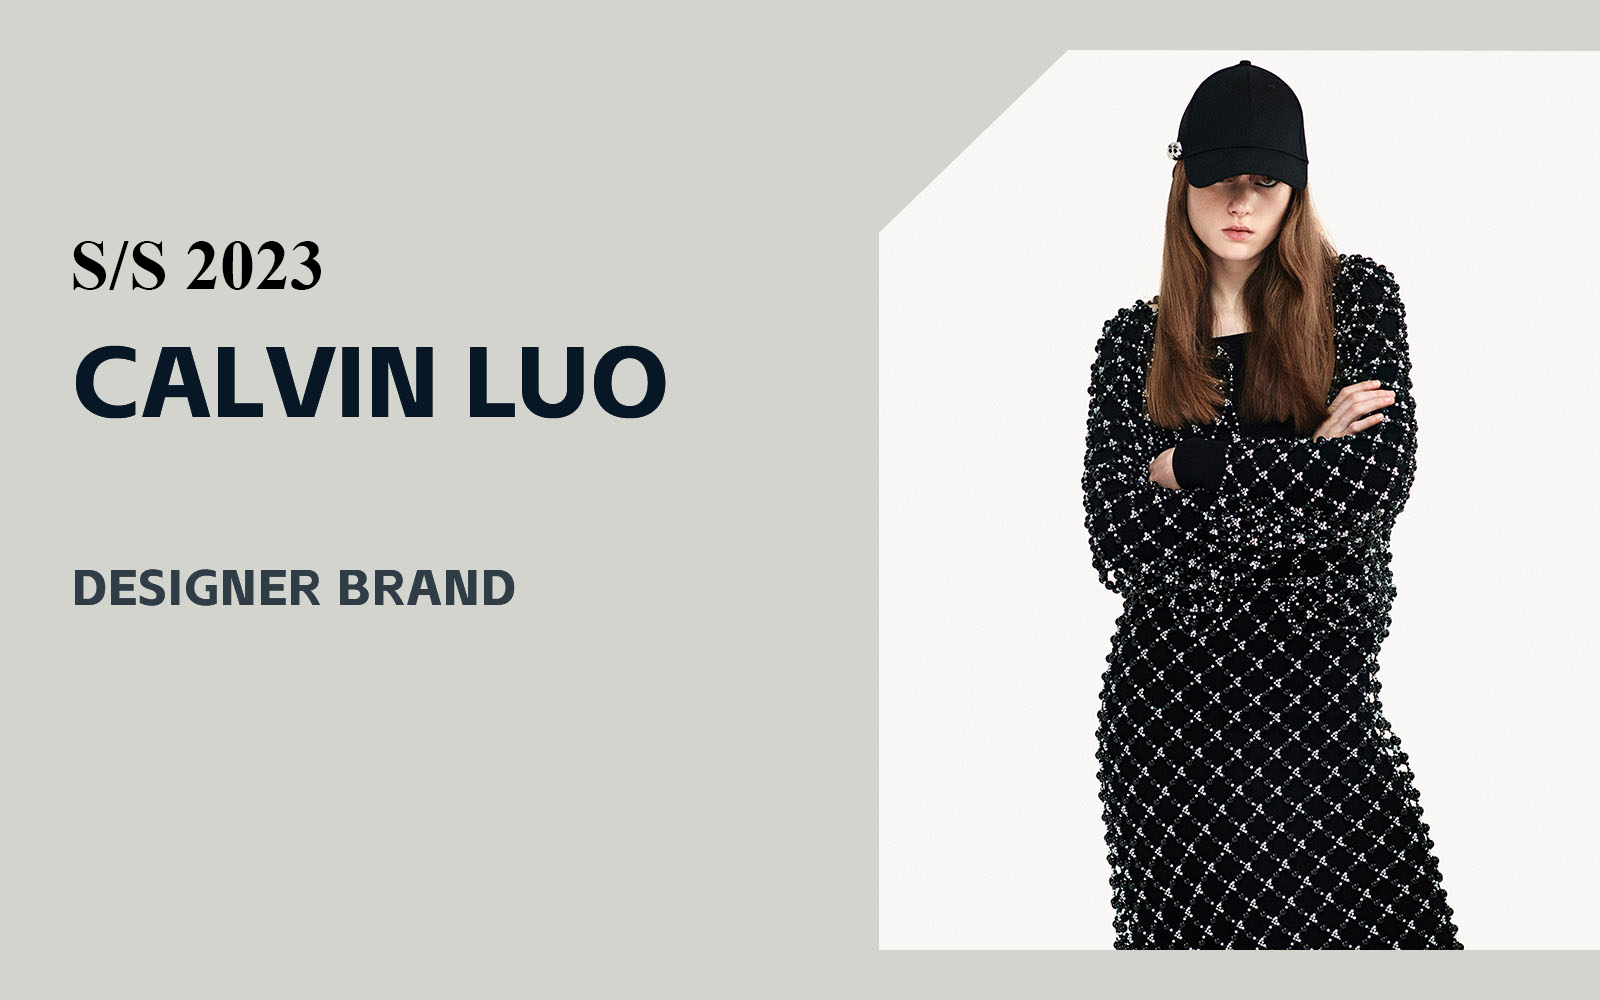 Urban College -- The Analysis of Calvin Luo The Womenswear Designer Brand